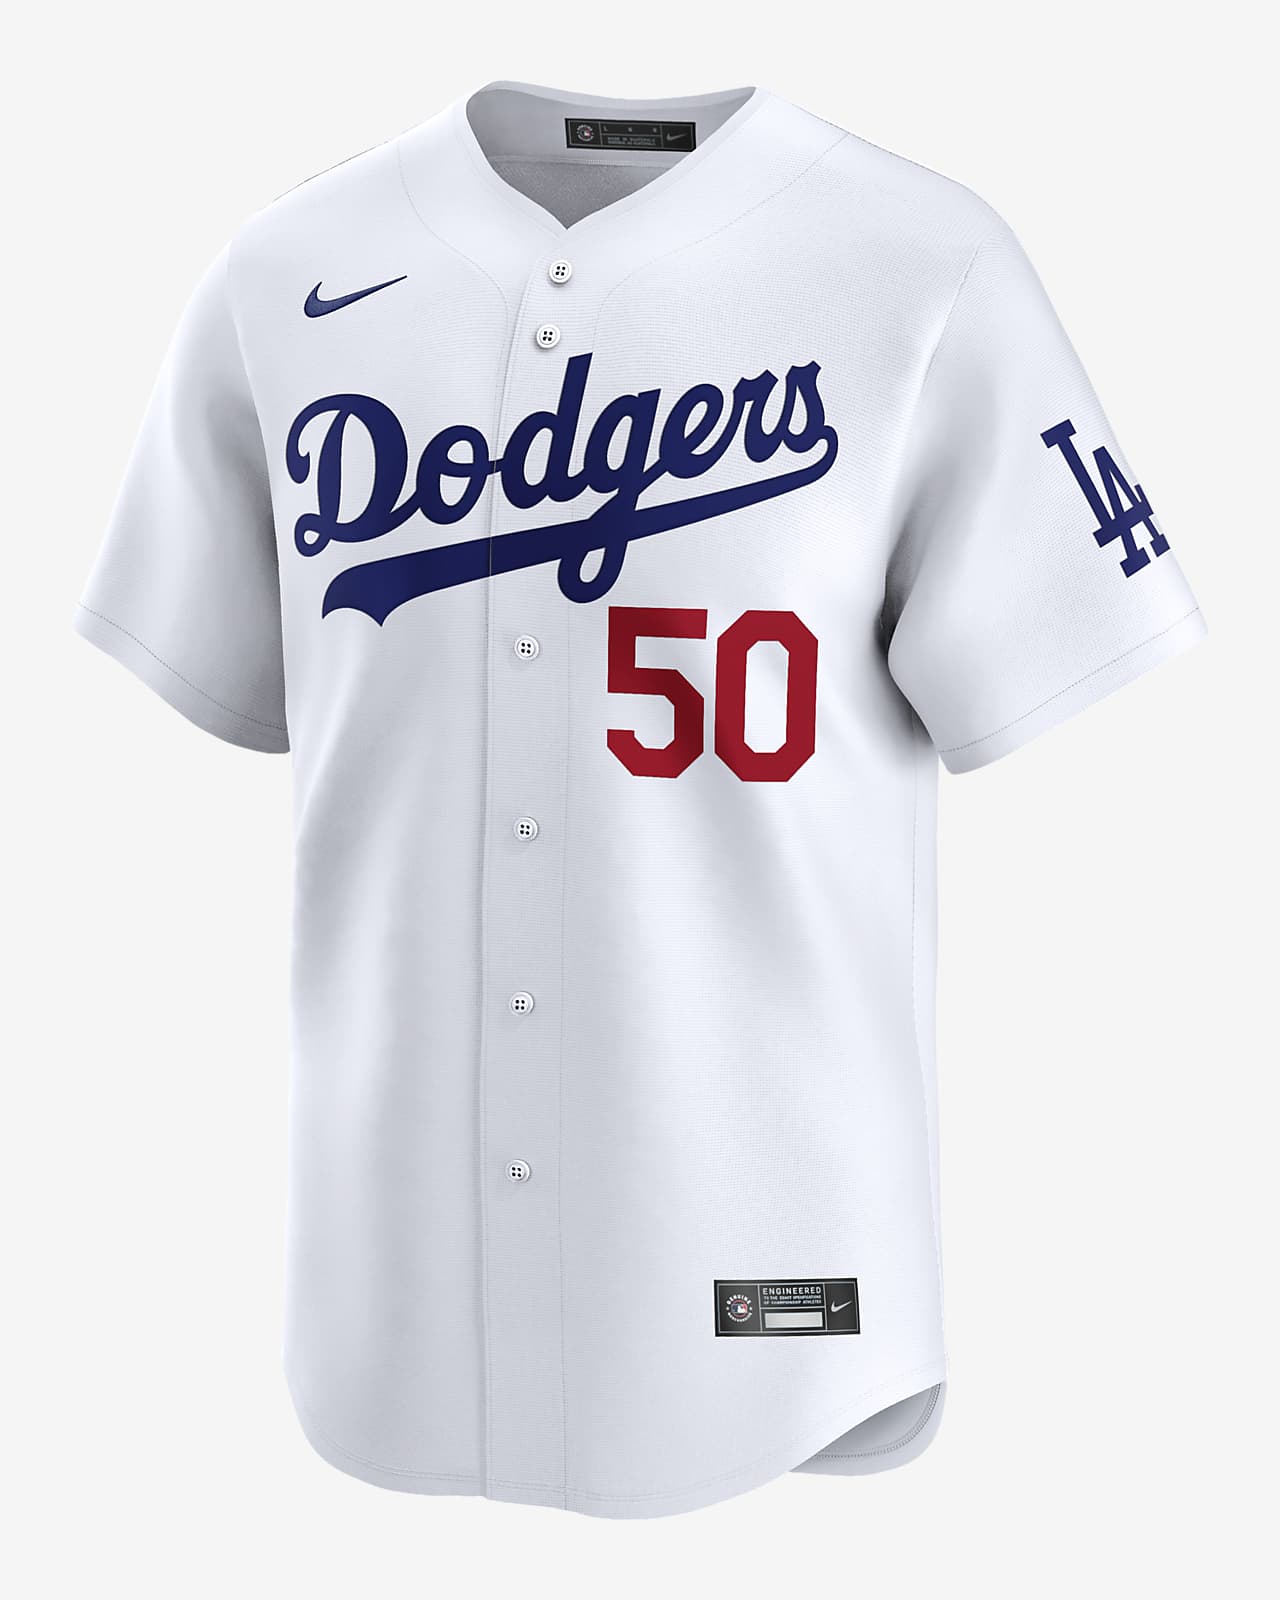 Mookie Betts Los Angeles Dodgers Men's Nike Dri-FIT ADV MLB Limited Jersey